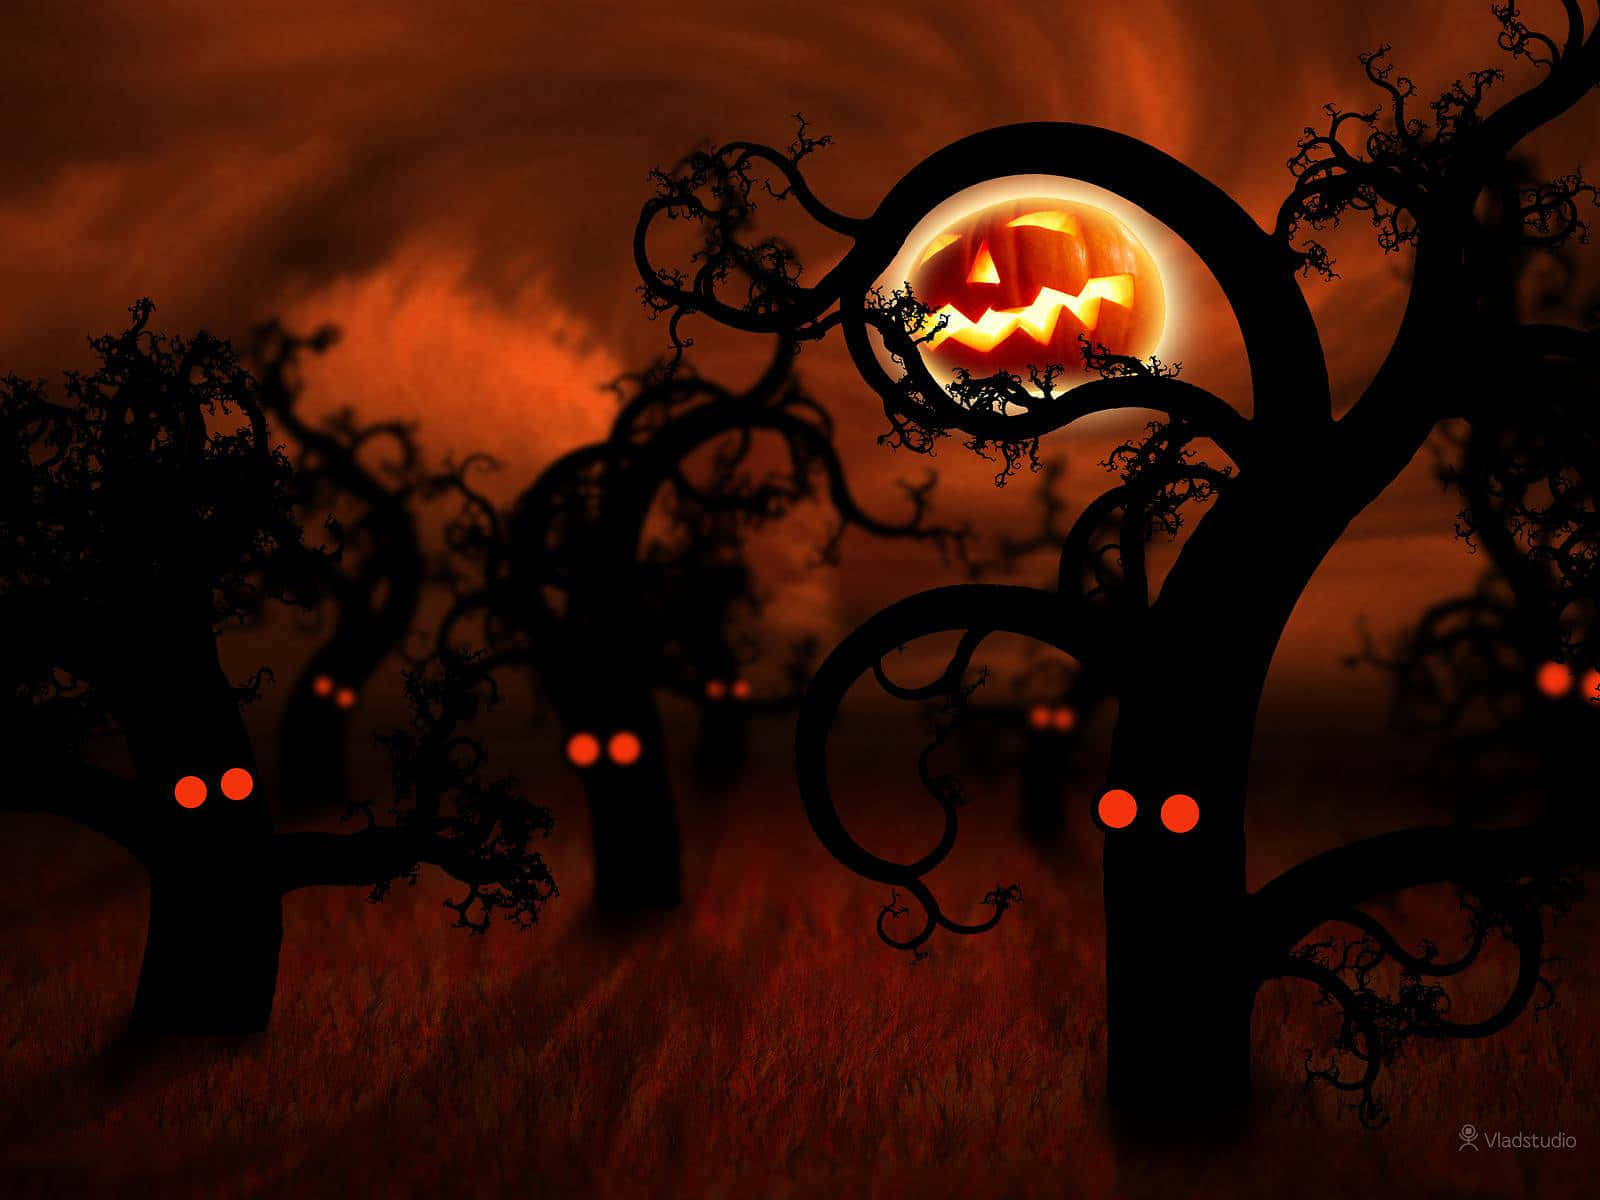 Enjoying a Spooky Halloween Night at a Chilling Graveyard Wallpaper